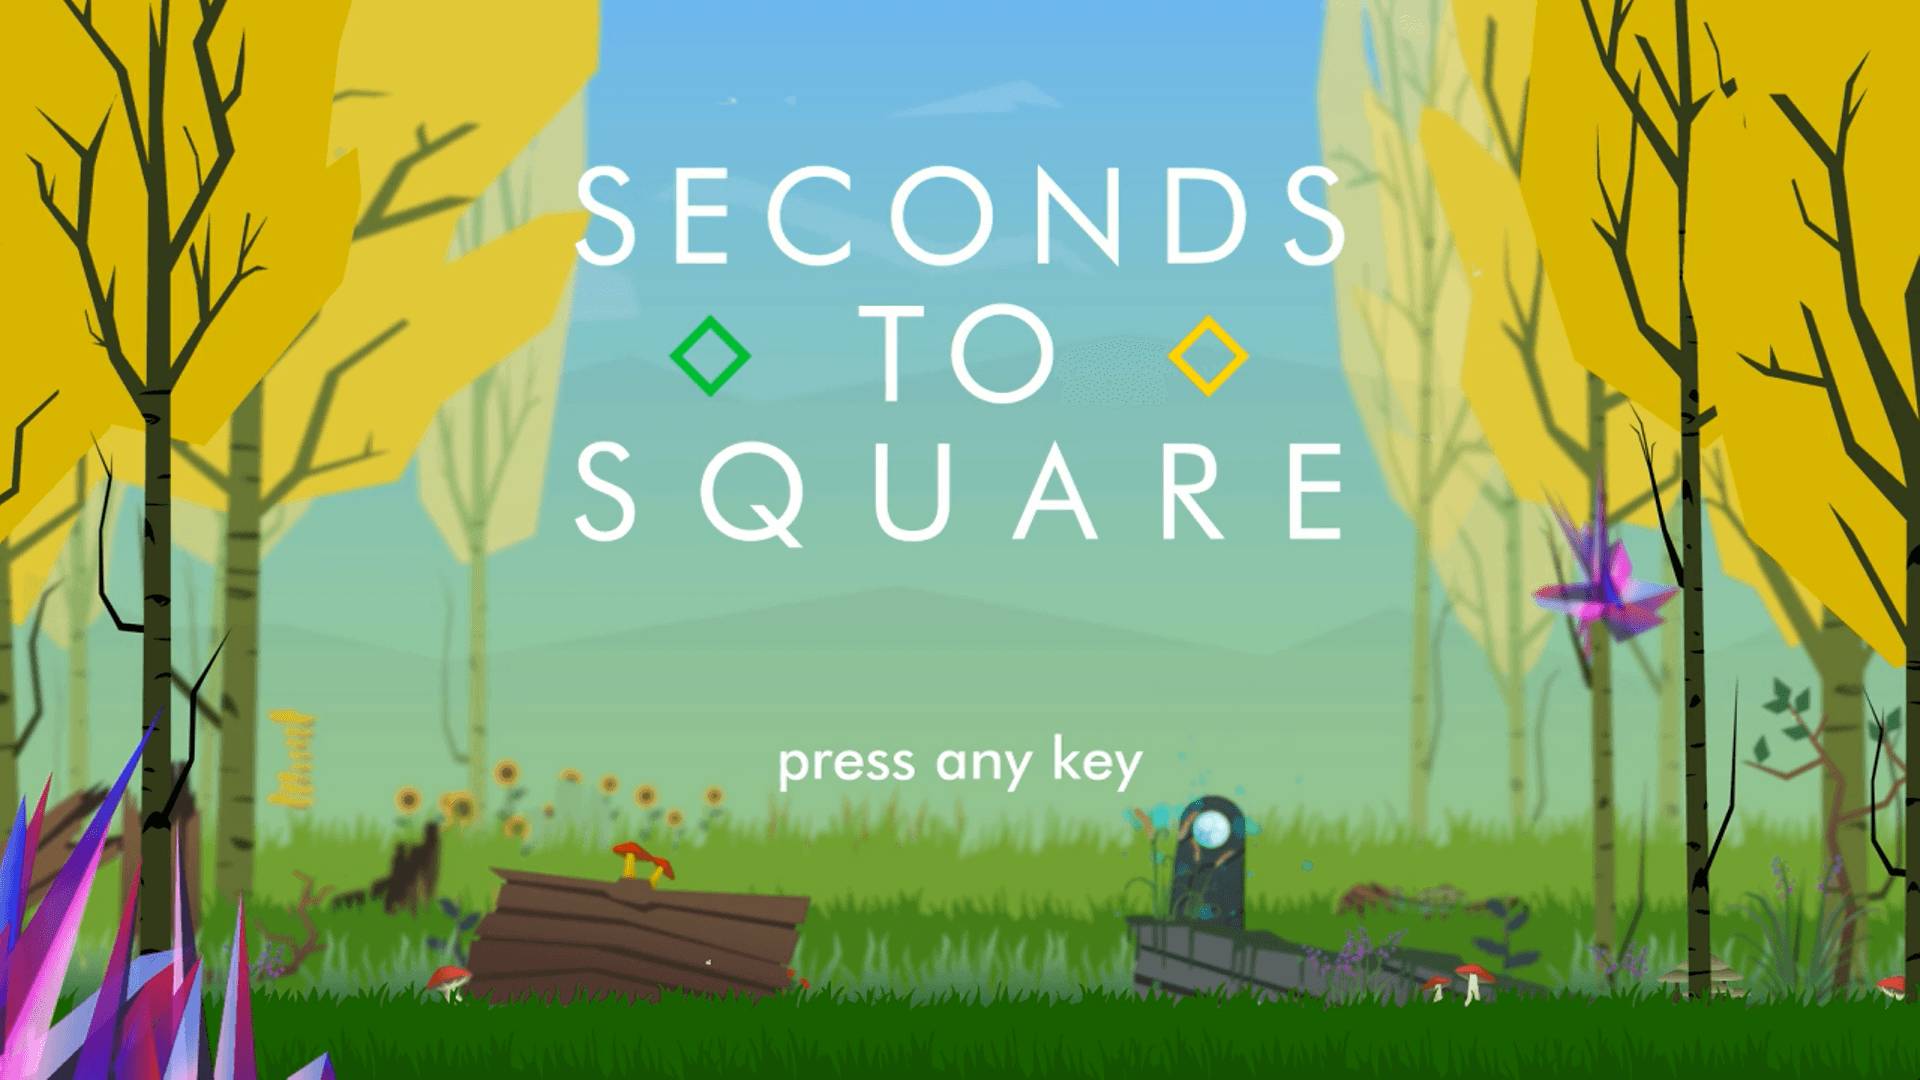 5 Seconds игра. 30 Seconds game. Steam Square. Square two.